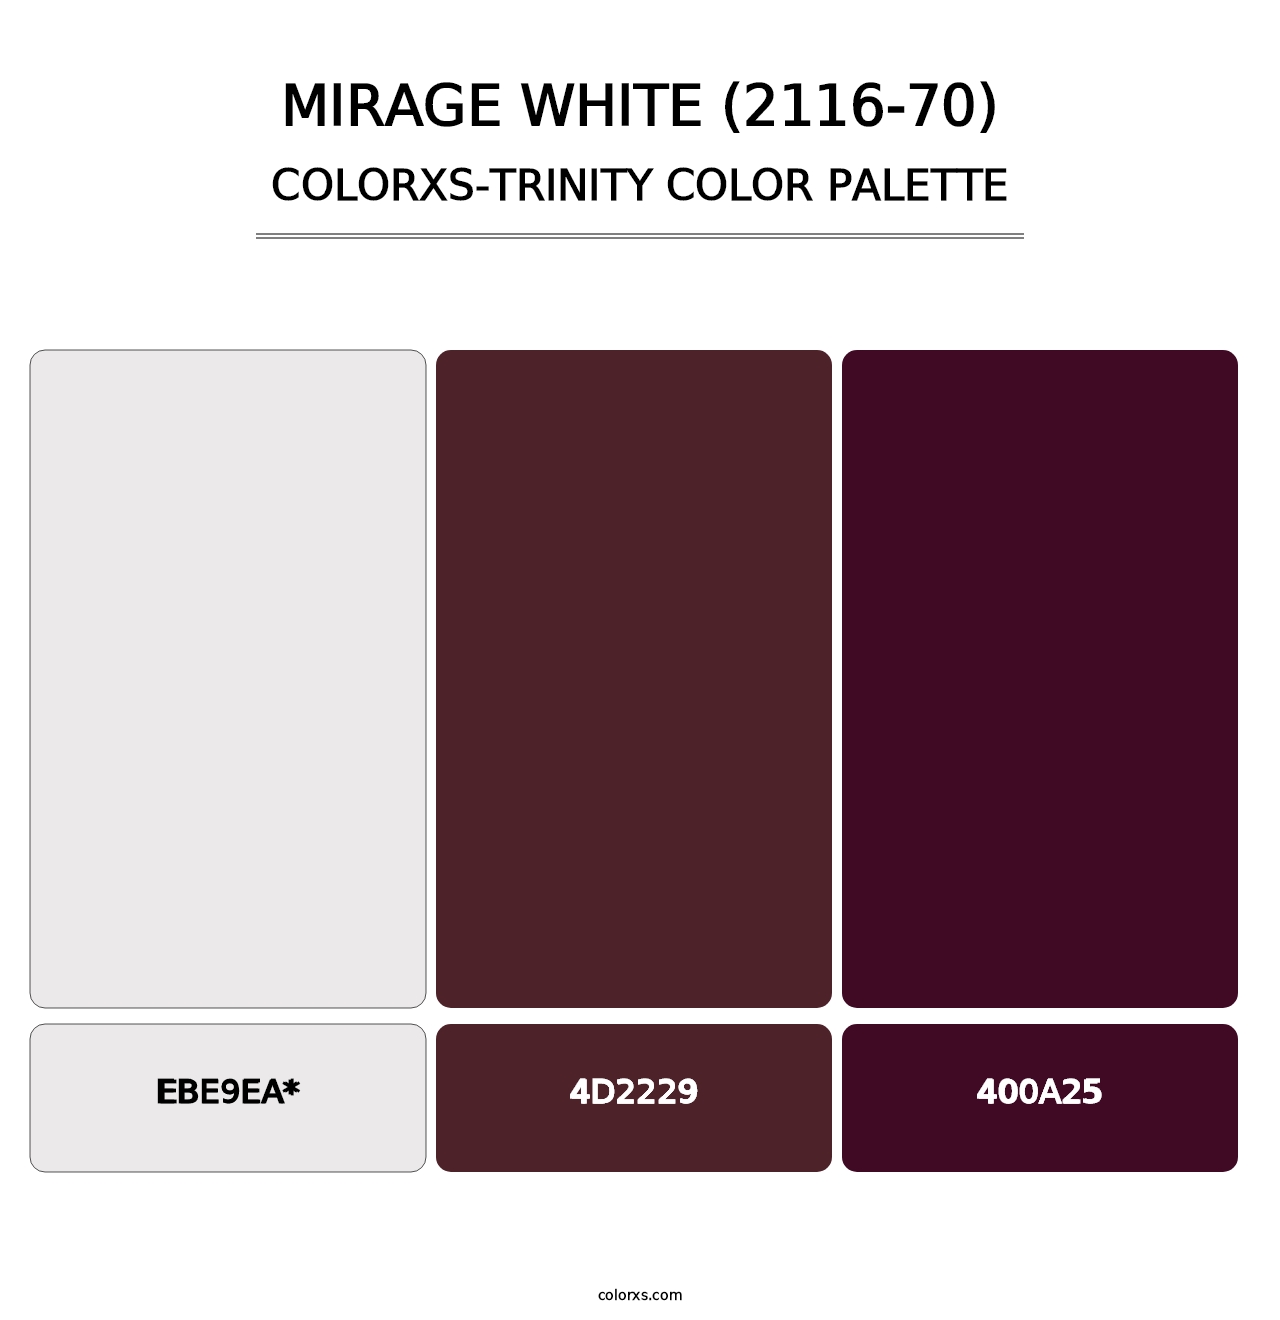 Mirage White (2116-70) - Colorxs Trinity Palette